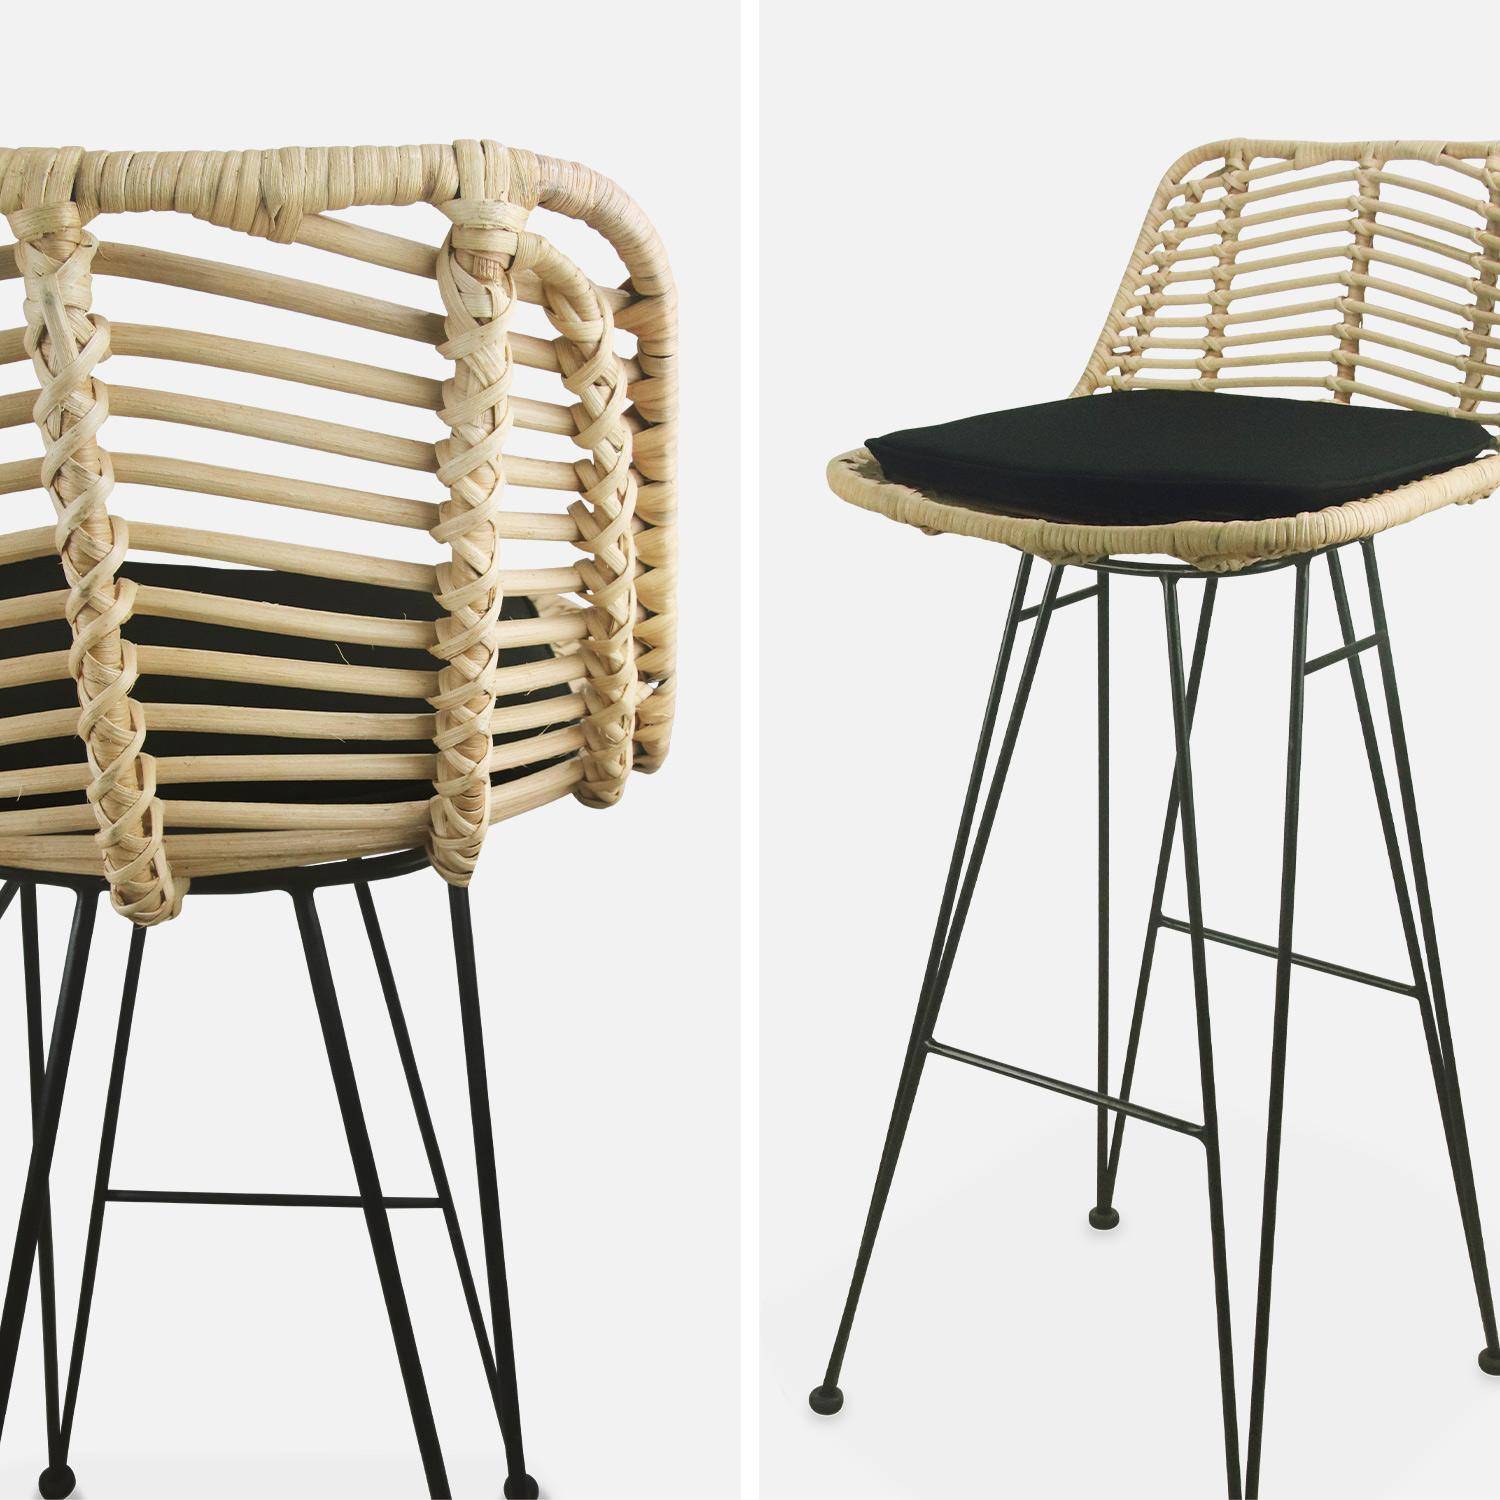 Pair of rattan bar stools, natural, L42.5xD48xH97cm, Cahya,sweeek,Photo5